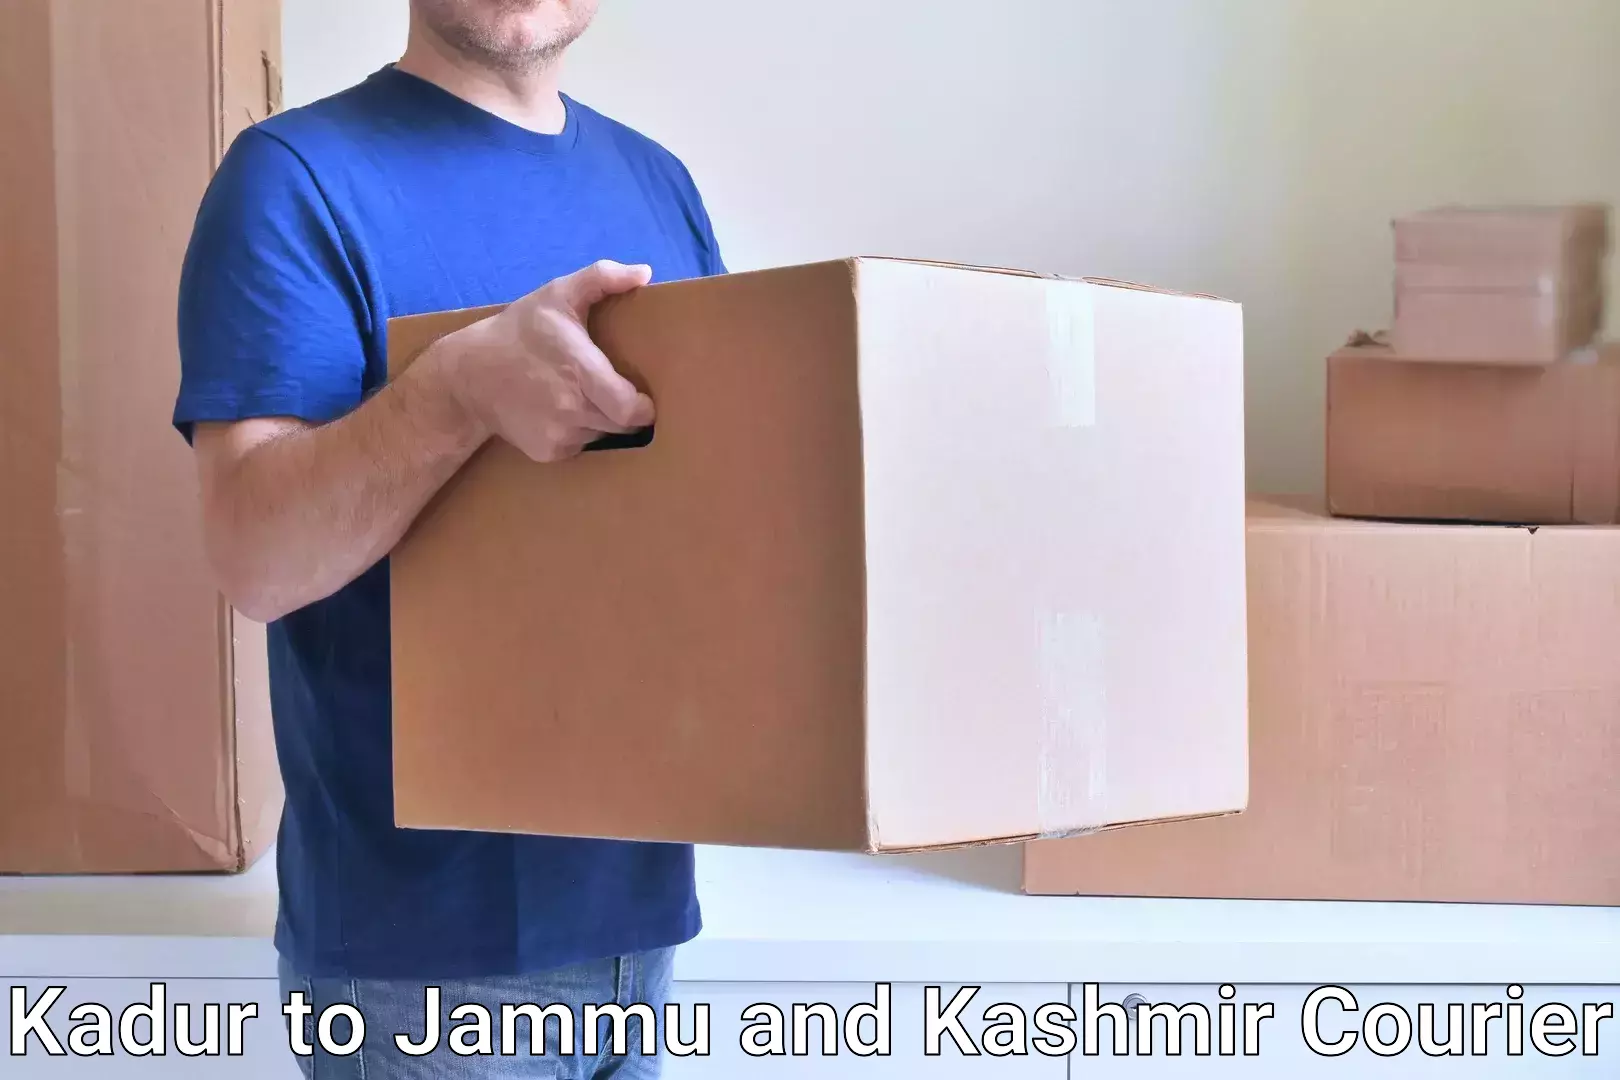 Expedited shipping methods Kadur to Shopian